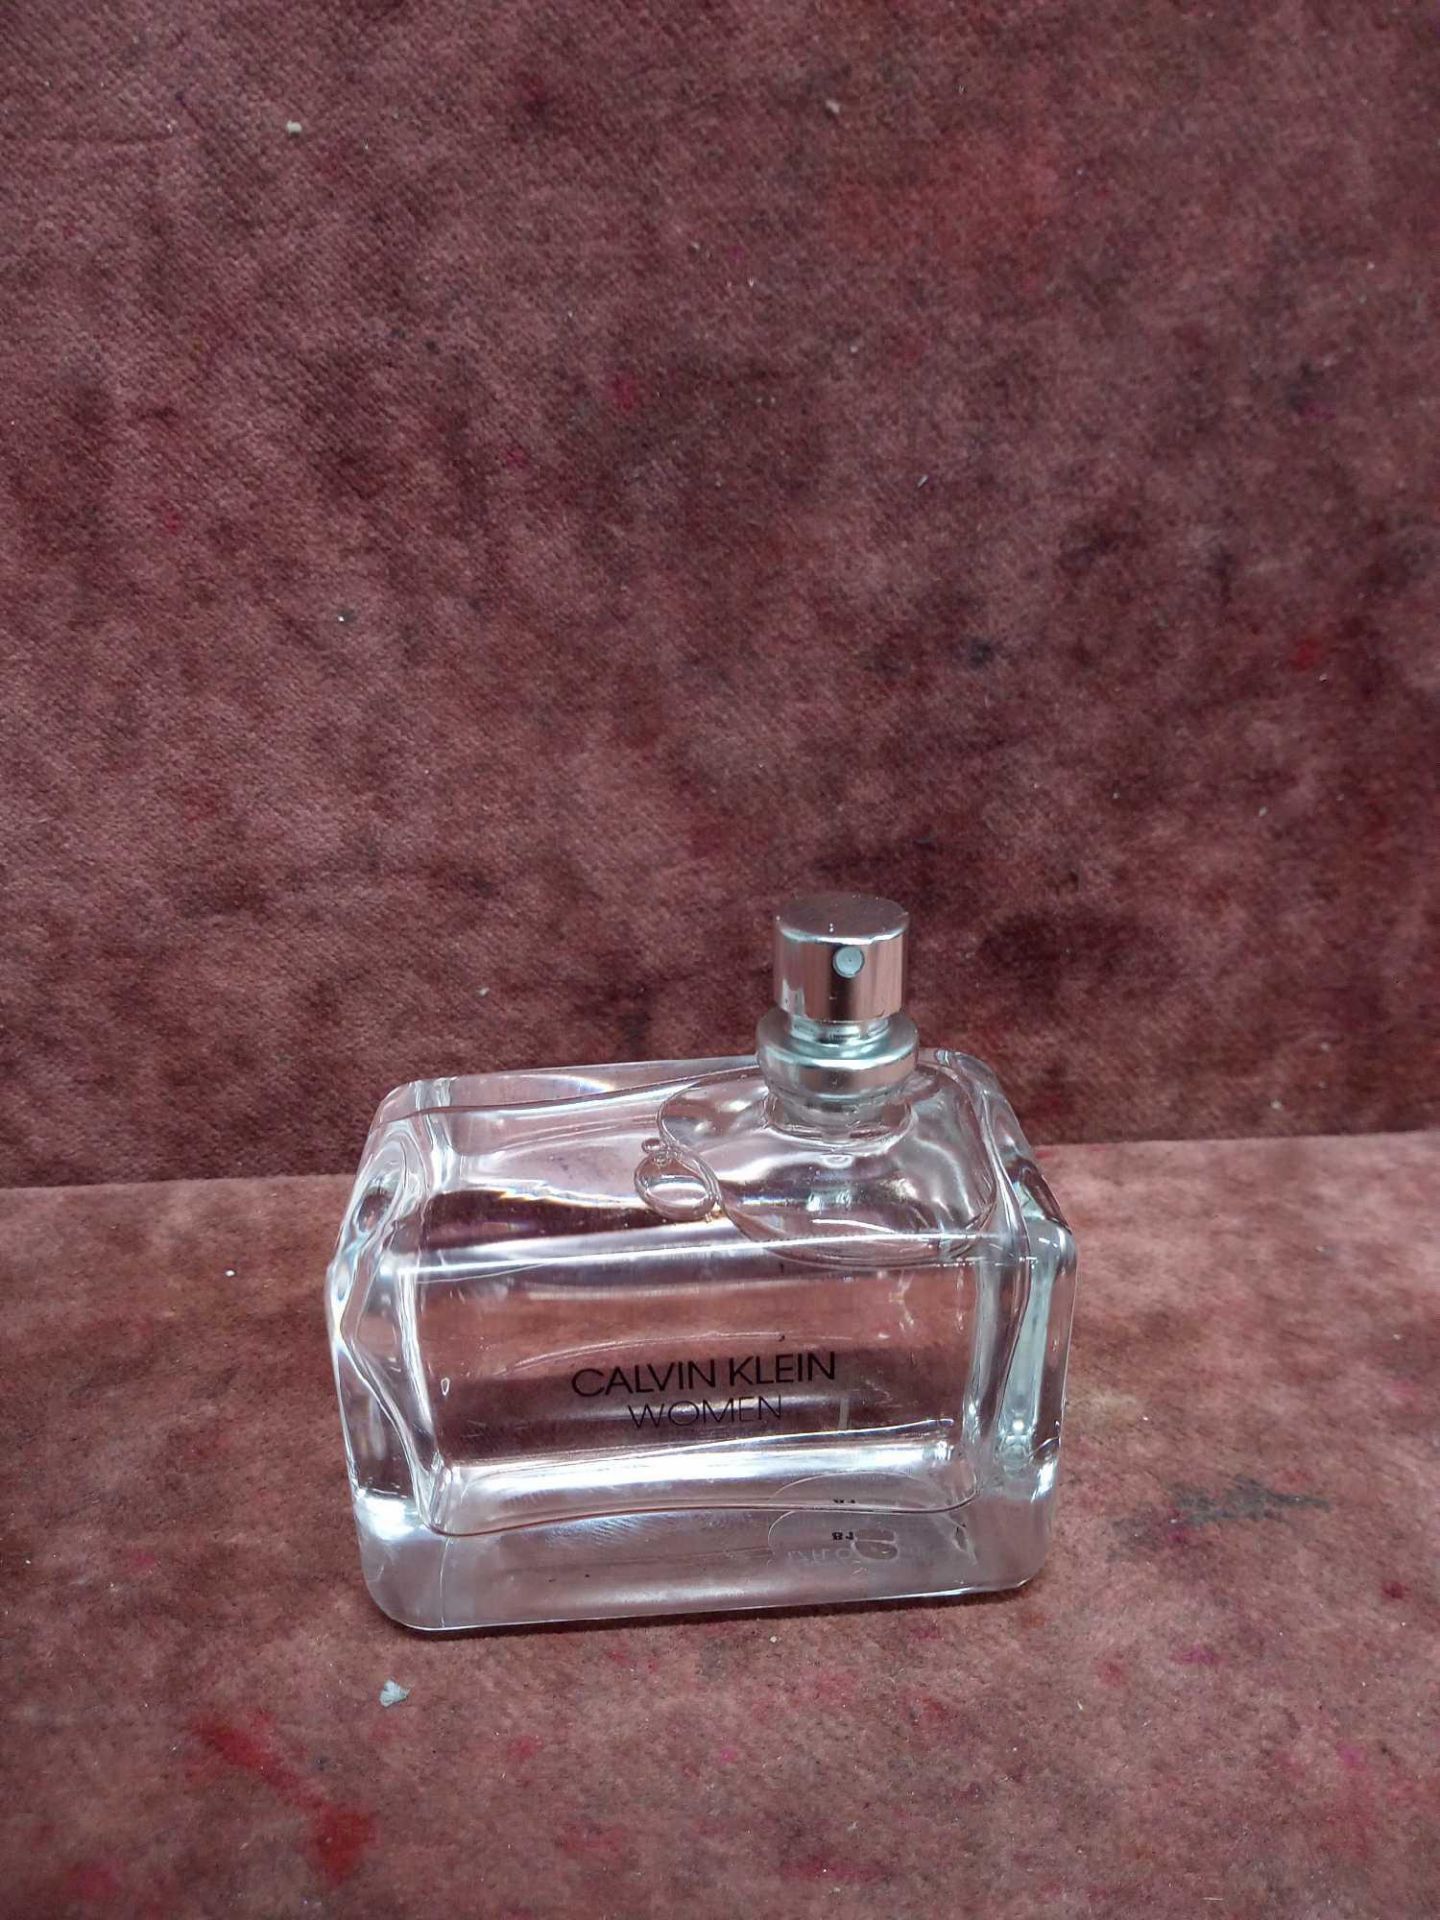 (Jb) RRP £80 Unboxed 100Ml Tester Bottle Of Calvin Klein Women Eau De Parfum Spray Ex-Display